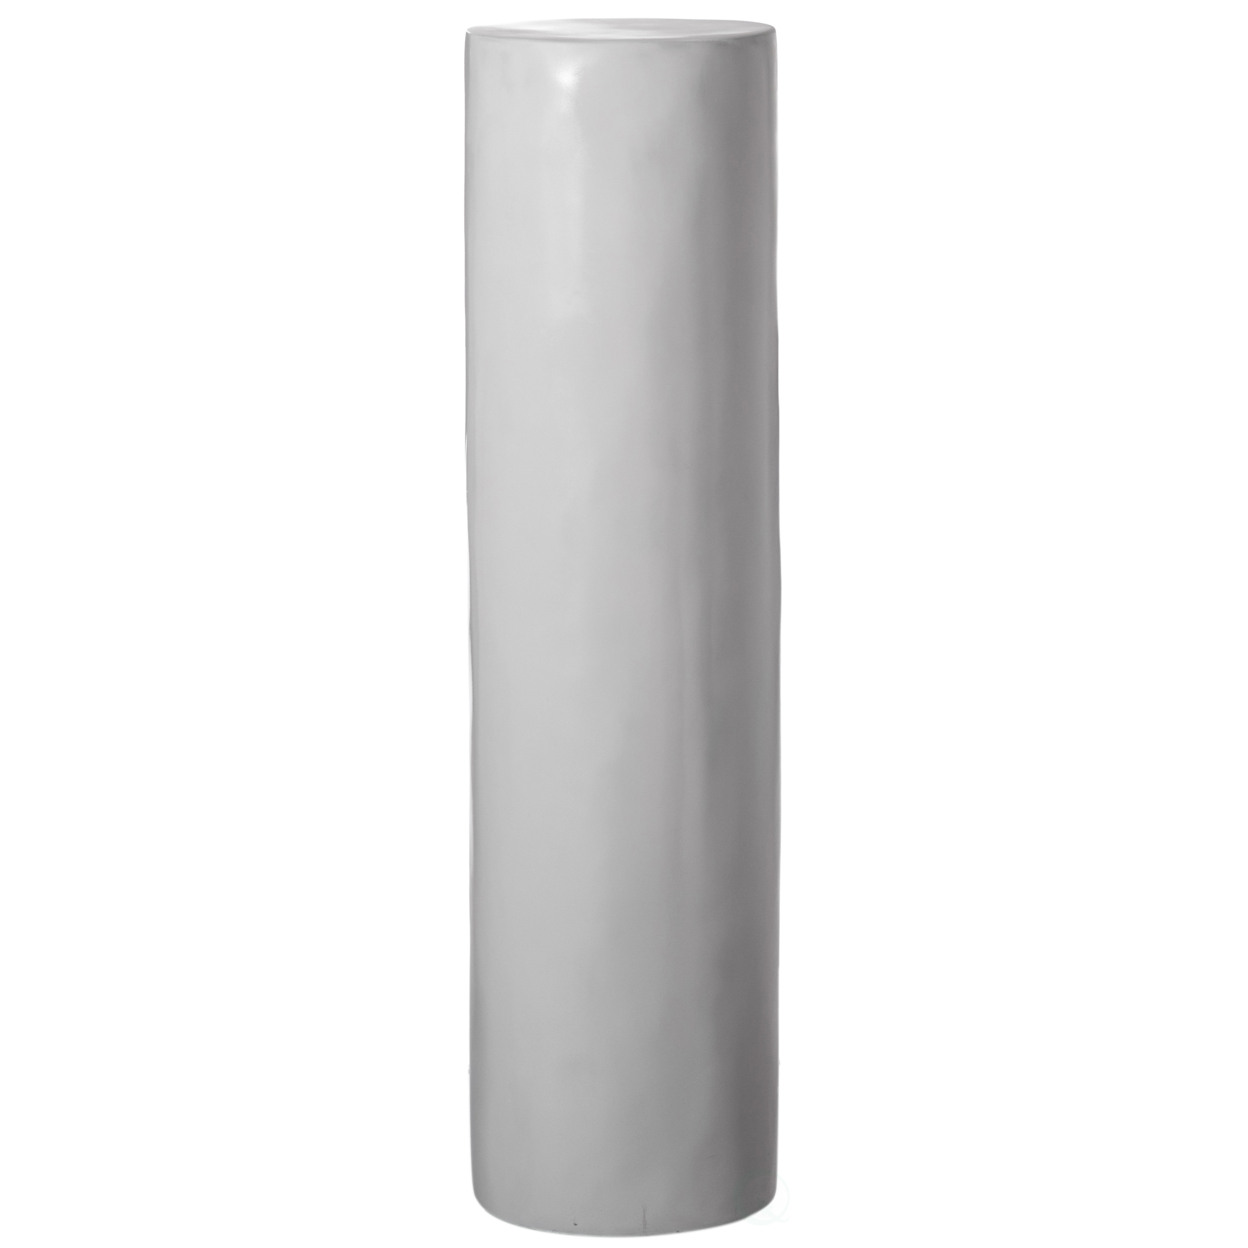 Decorative Modern Fiberglass Pillar Column Flower Stand Cylinder Shape Pedestal For Wedding, Living Room, Or Dining Room - Tall 47